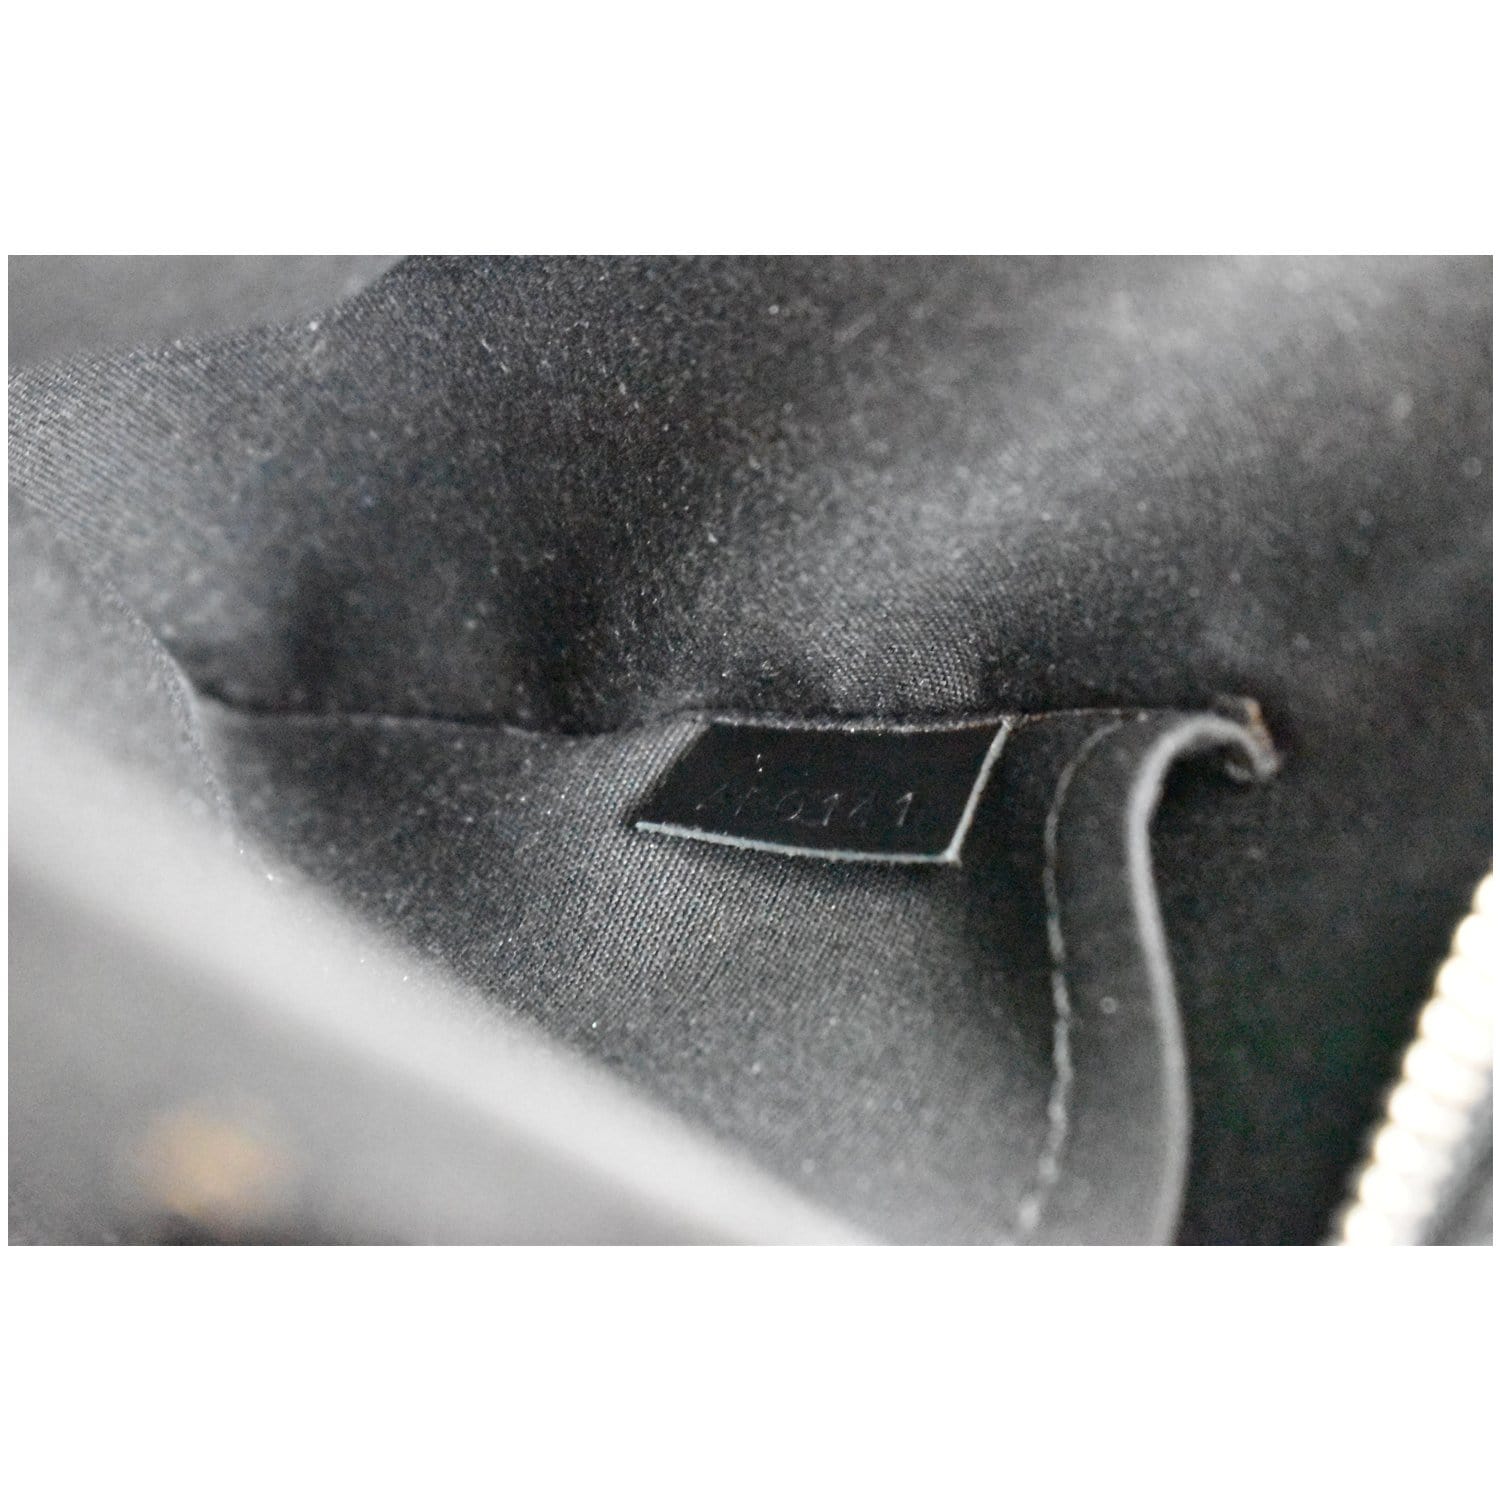 Louis Vuitton Vintage - Epi Madeleine PM Bag - Black - Leather and